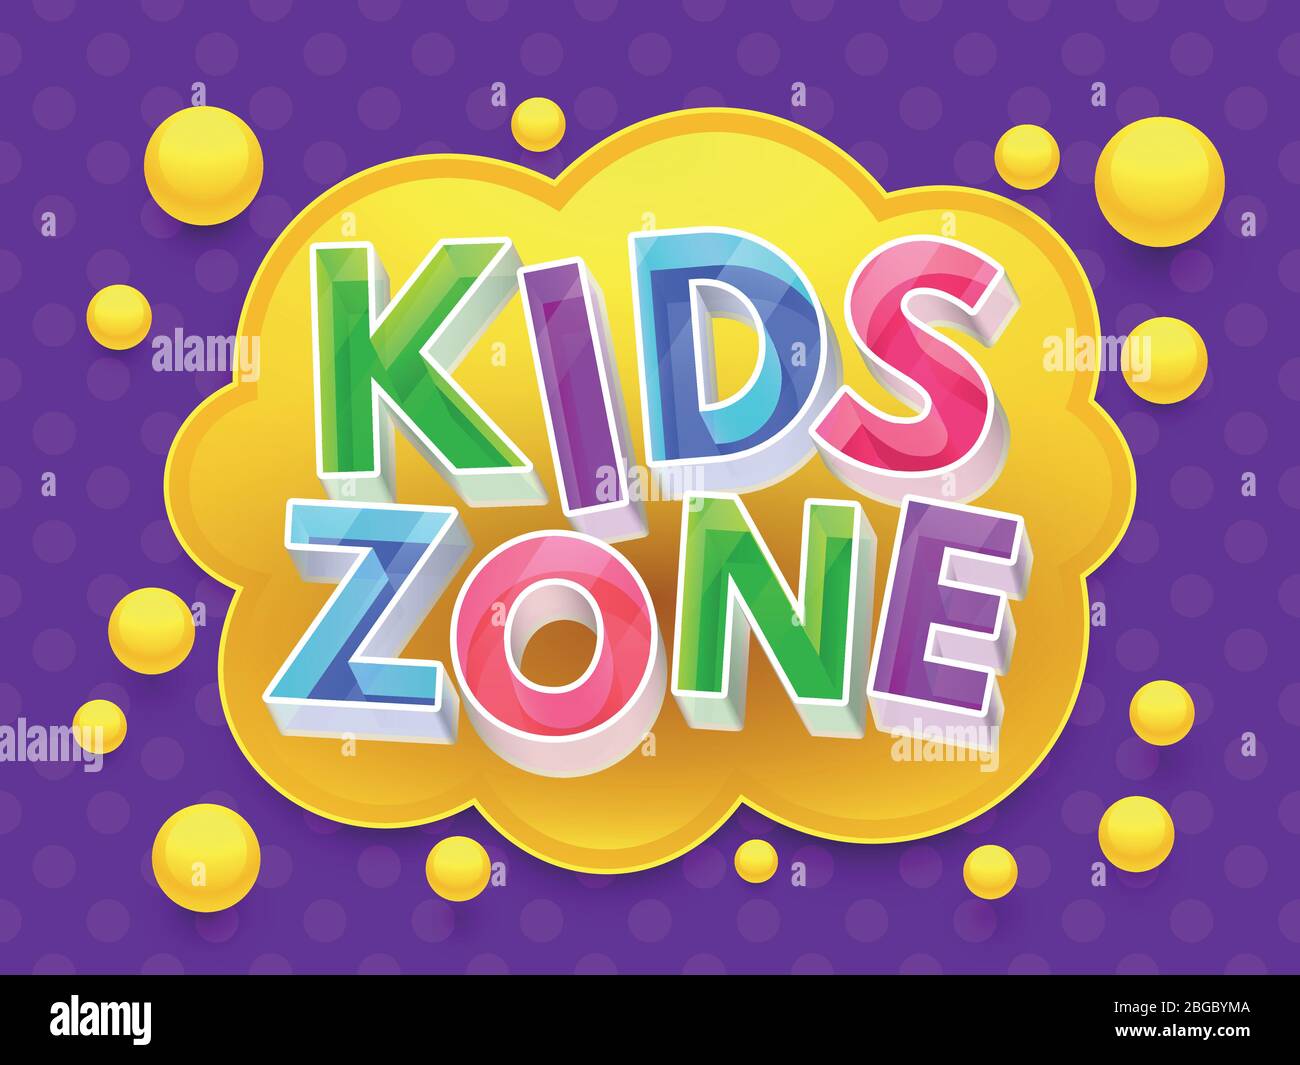 Kinder Zone Grafik Vektor Banner für Kinder Spielzimmer. Spielzone für Kinder, Spielzimmer Kindheit farbigen Poster Illustration Stock Vektor